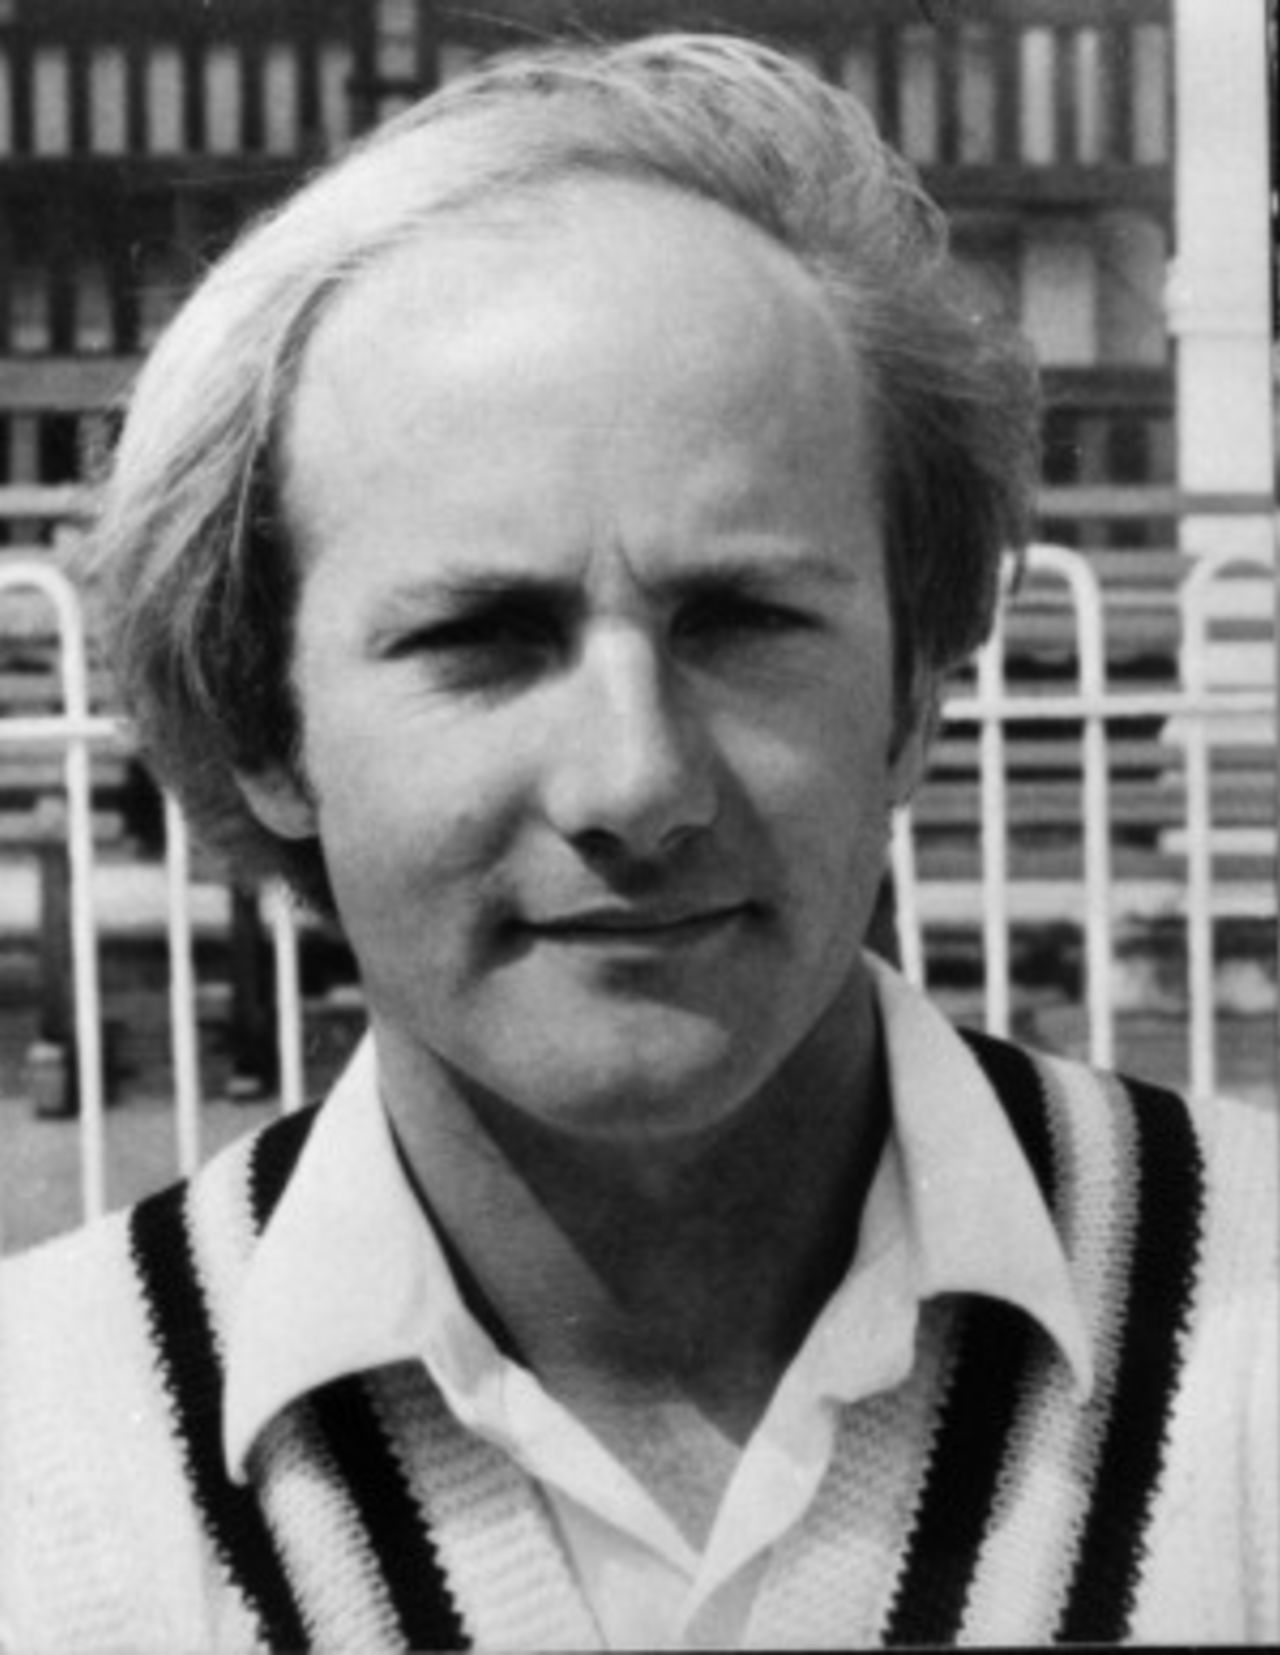 N.E.J.Pocock, Hampshire cricketer 1976-1984 (Captain 1980-1984).